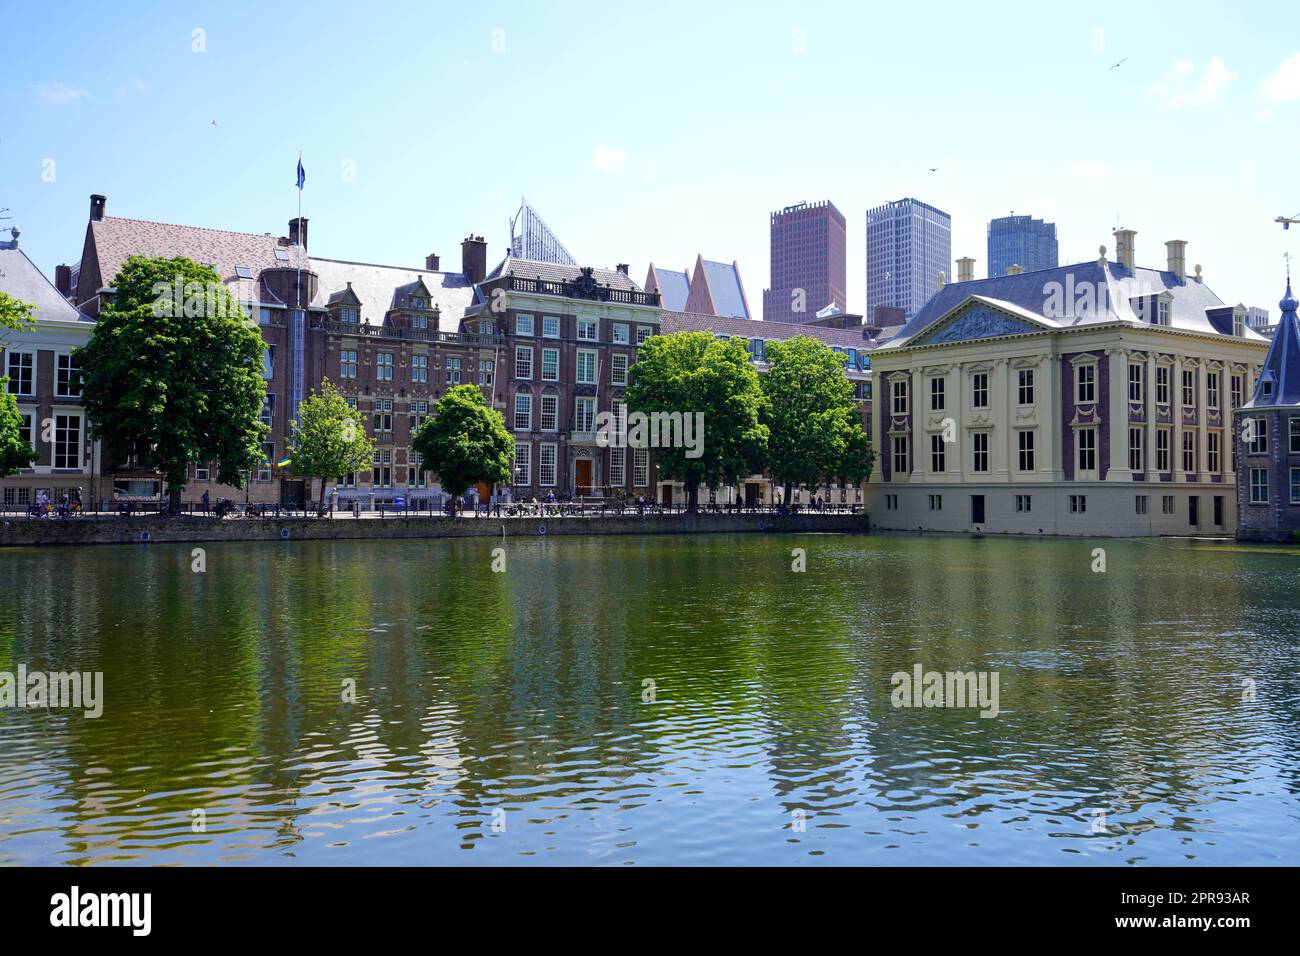 Mauritshuis art museum on Hofvijver pond, The Hague, Netherlands Stock Photo